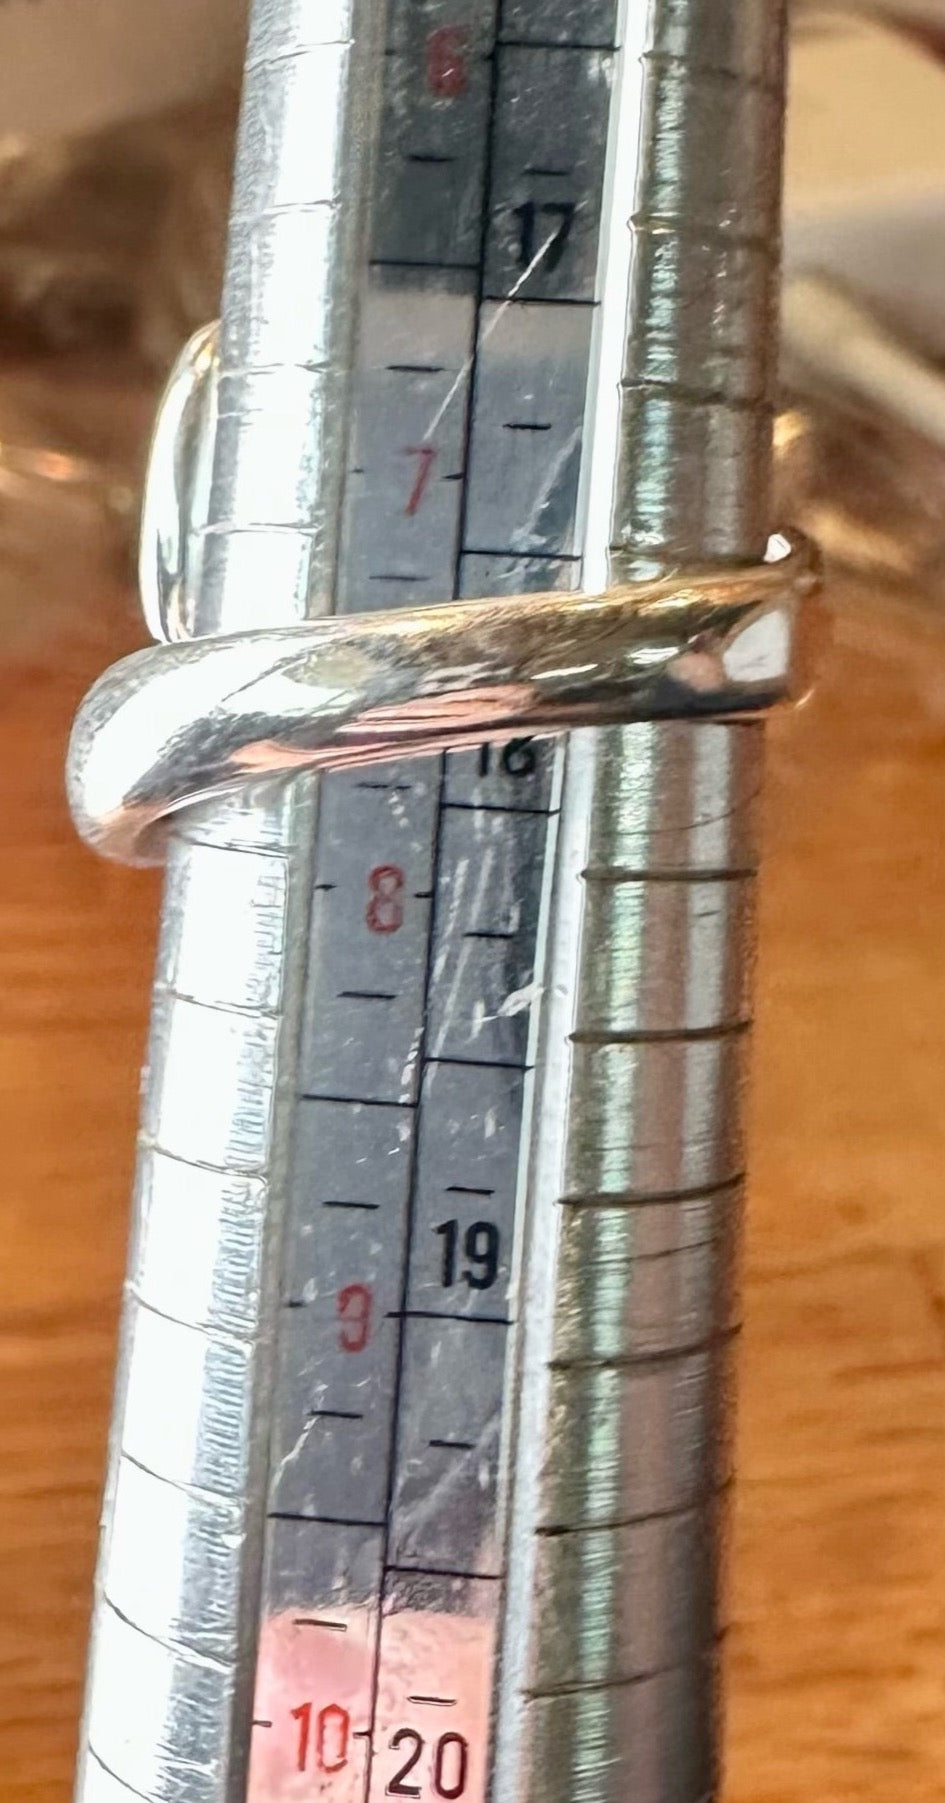 Sterling Silver 925 Modernist Wrap Ring Sz 7.5